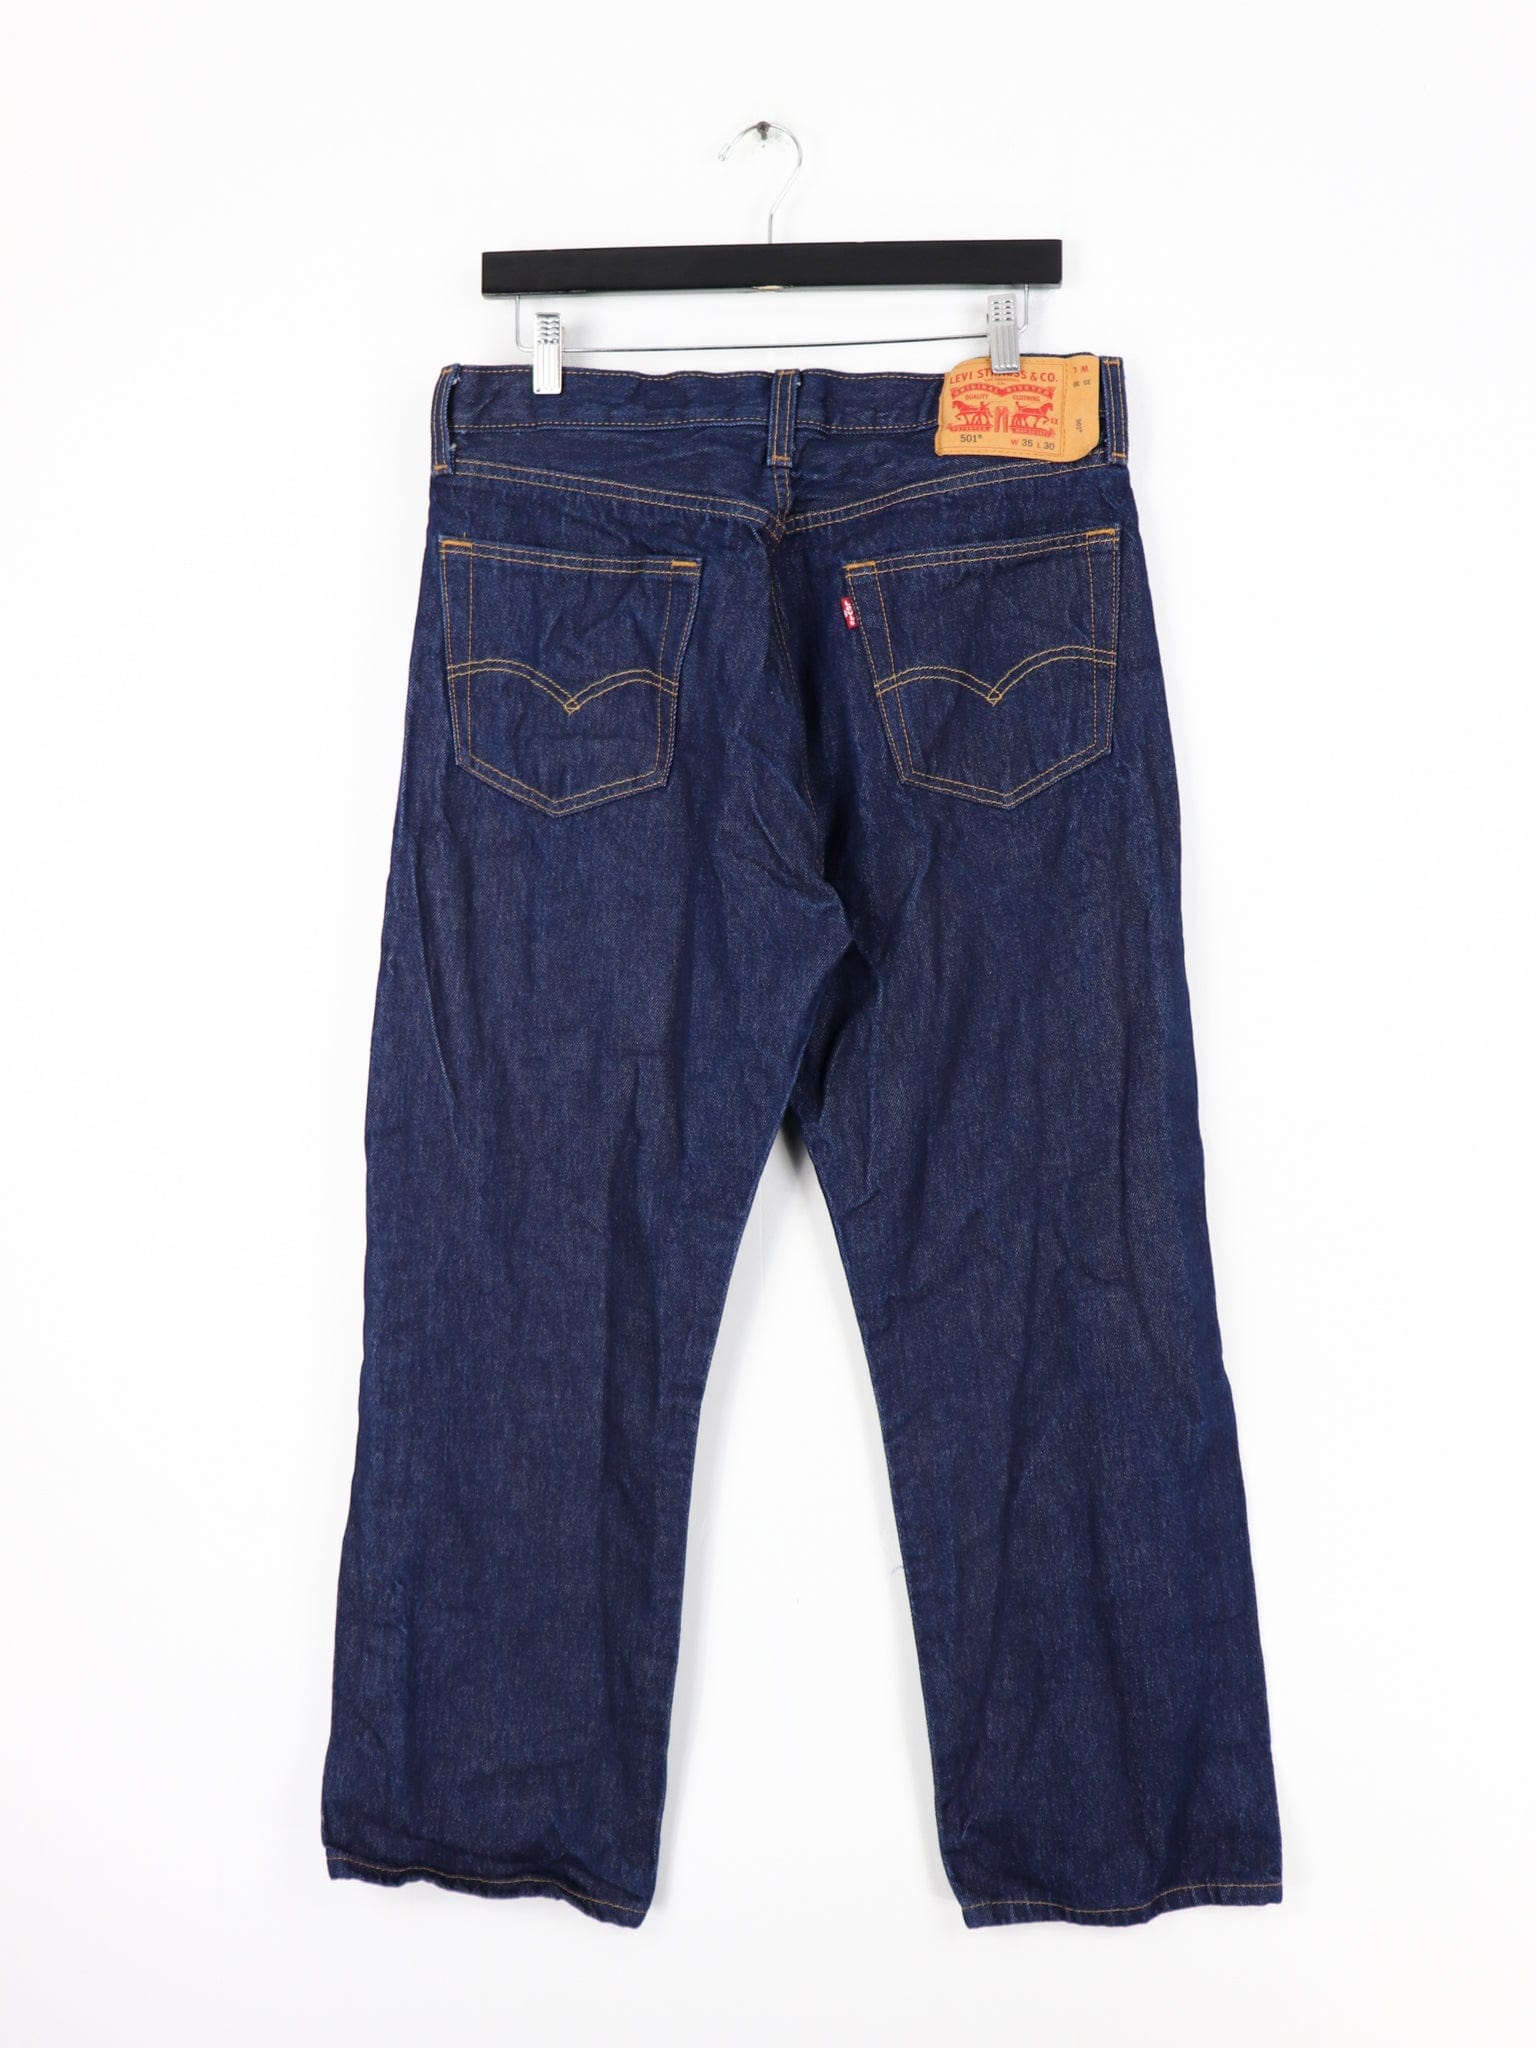 Levi's 501 Original Fit Denim Jeans Size 35 x 30 Fits 35 x 28